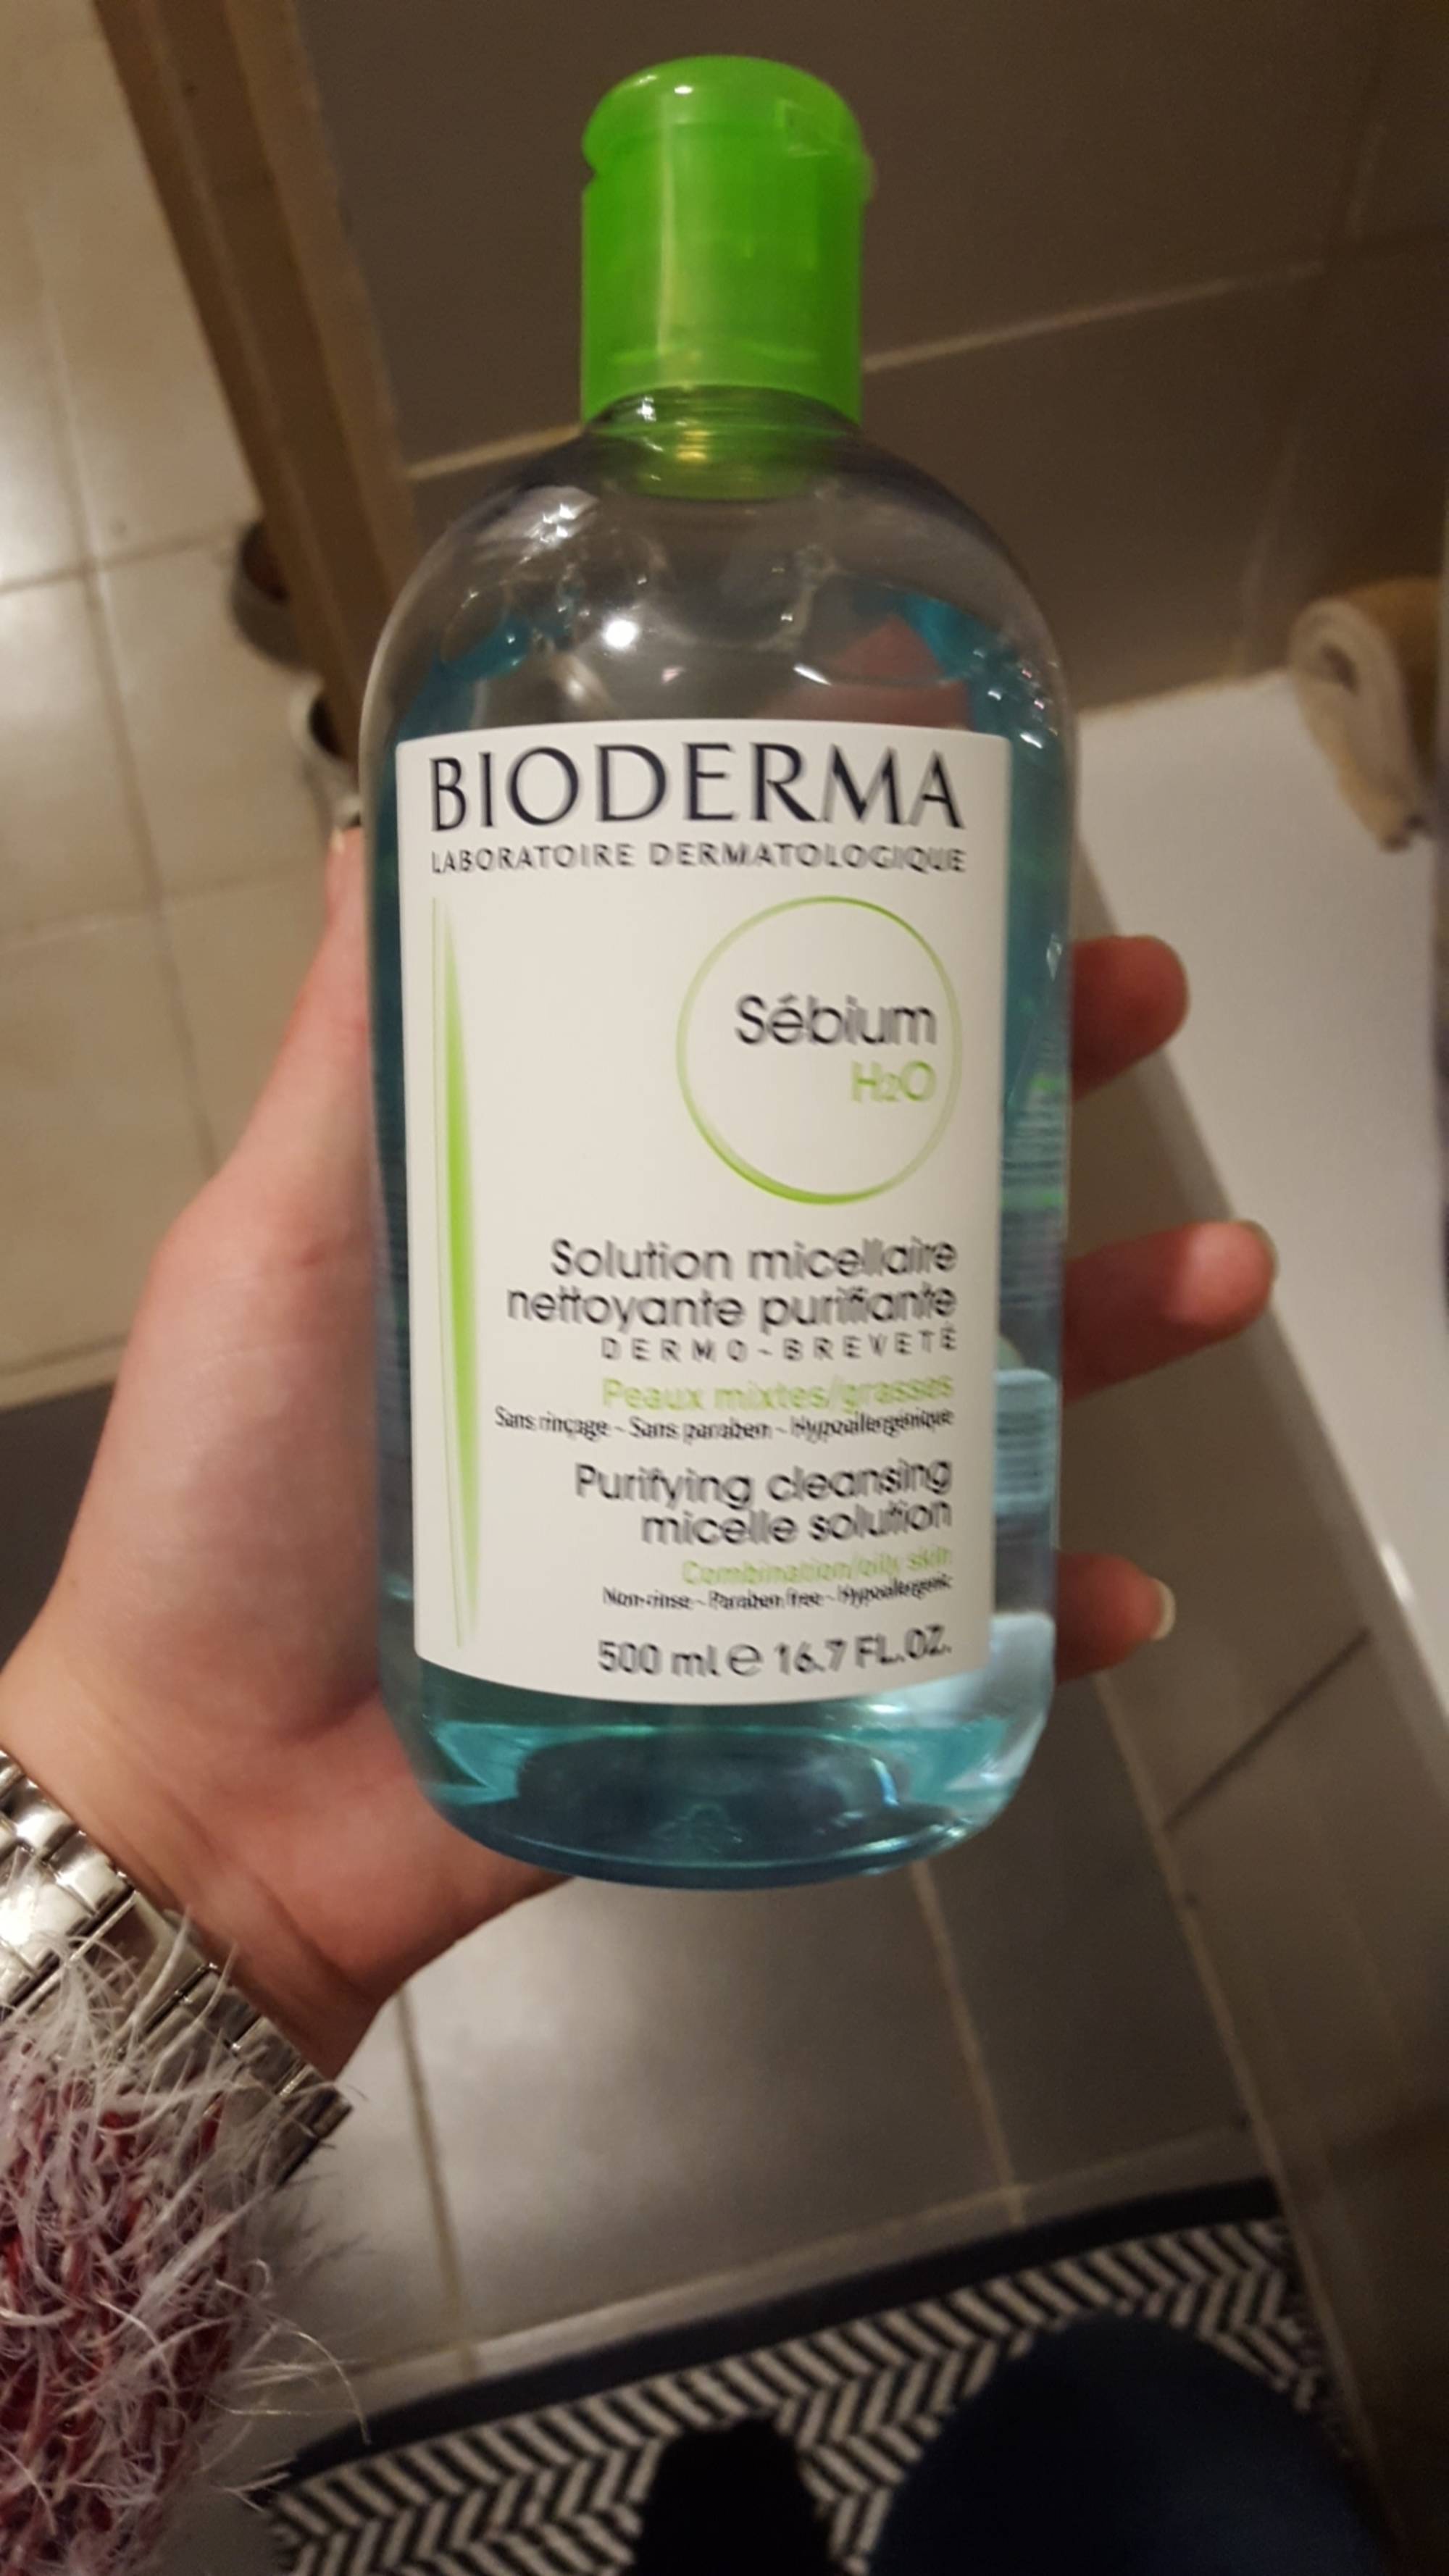 BIODERMA - Sébium H2O - Solution micellaire nettoyante purifiante